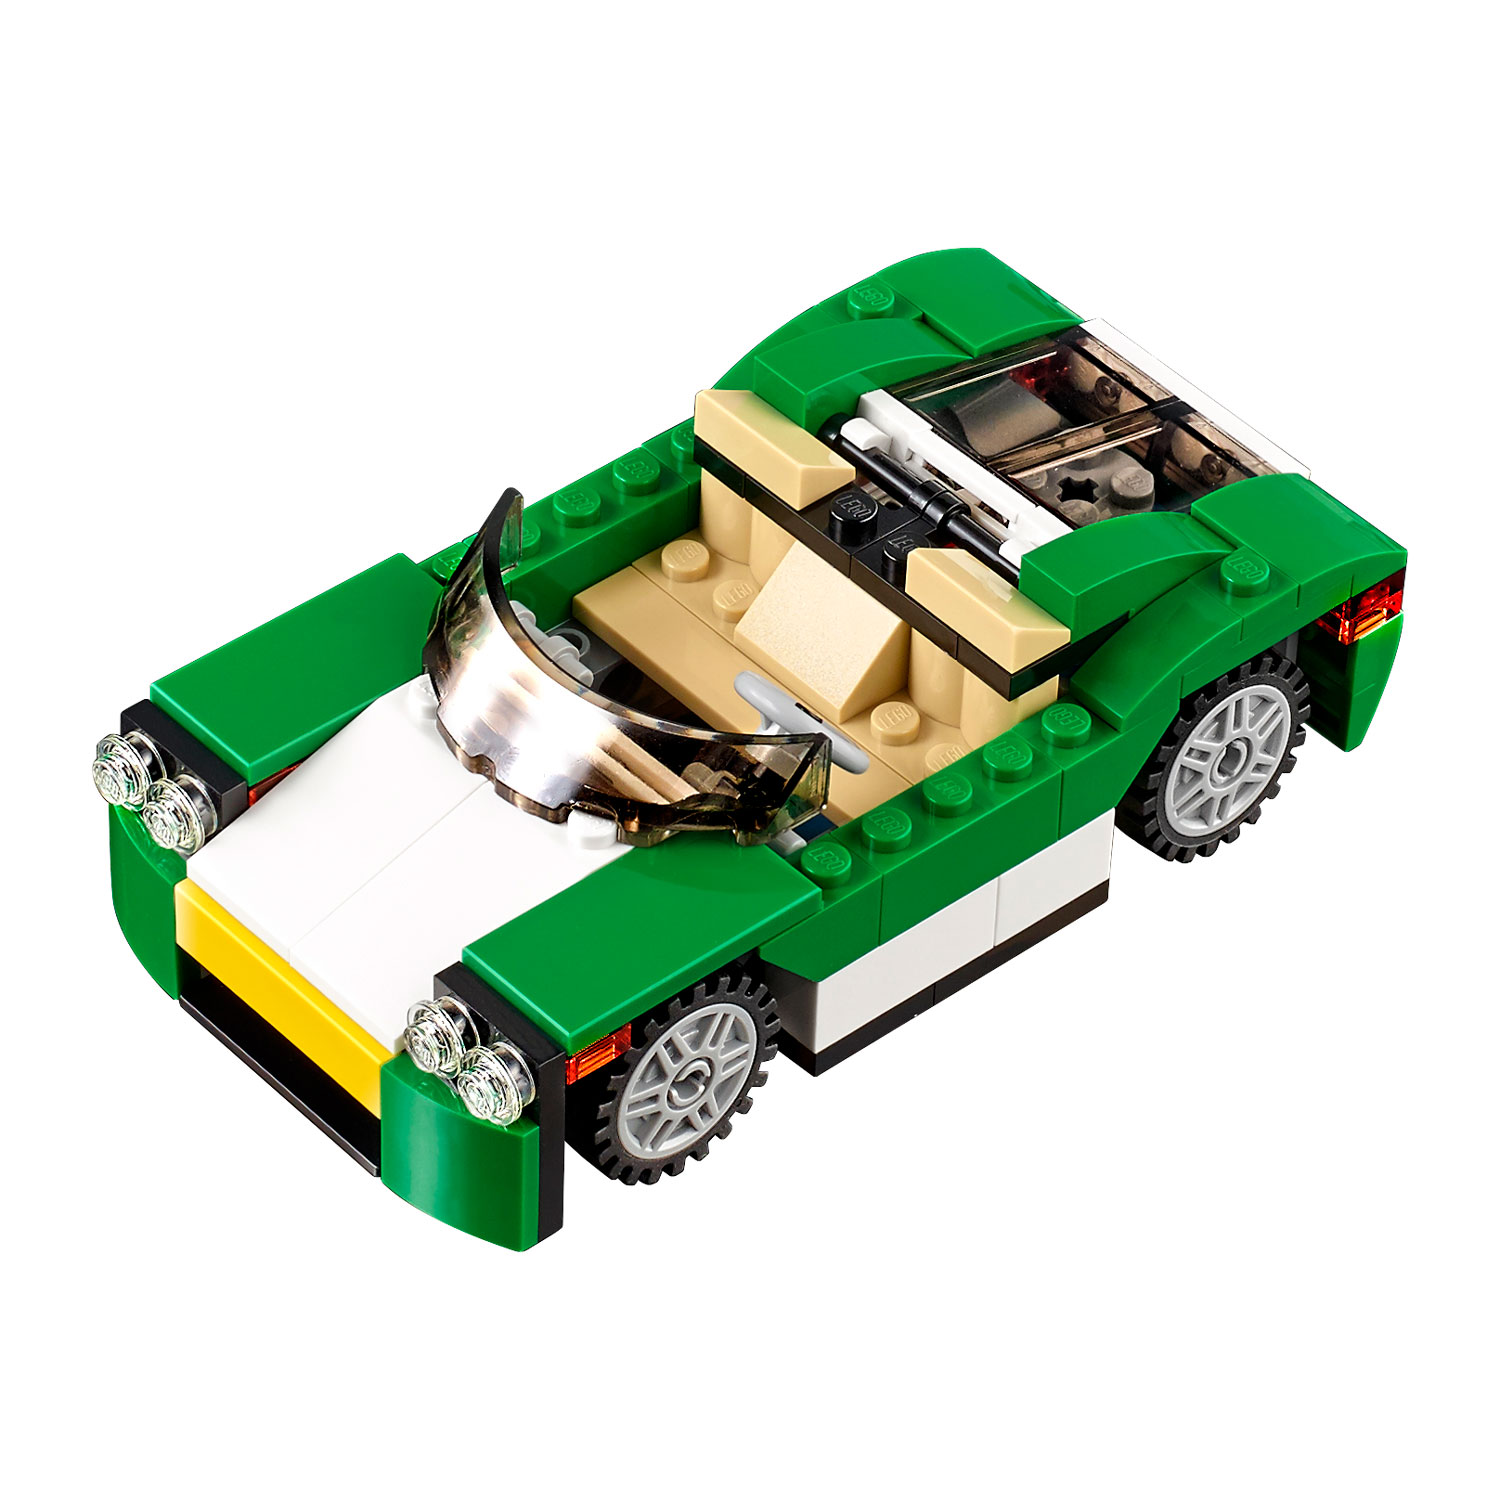 LEGO Creator 31056 Groene Sportwagen